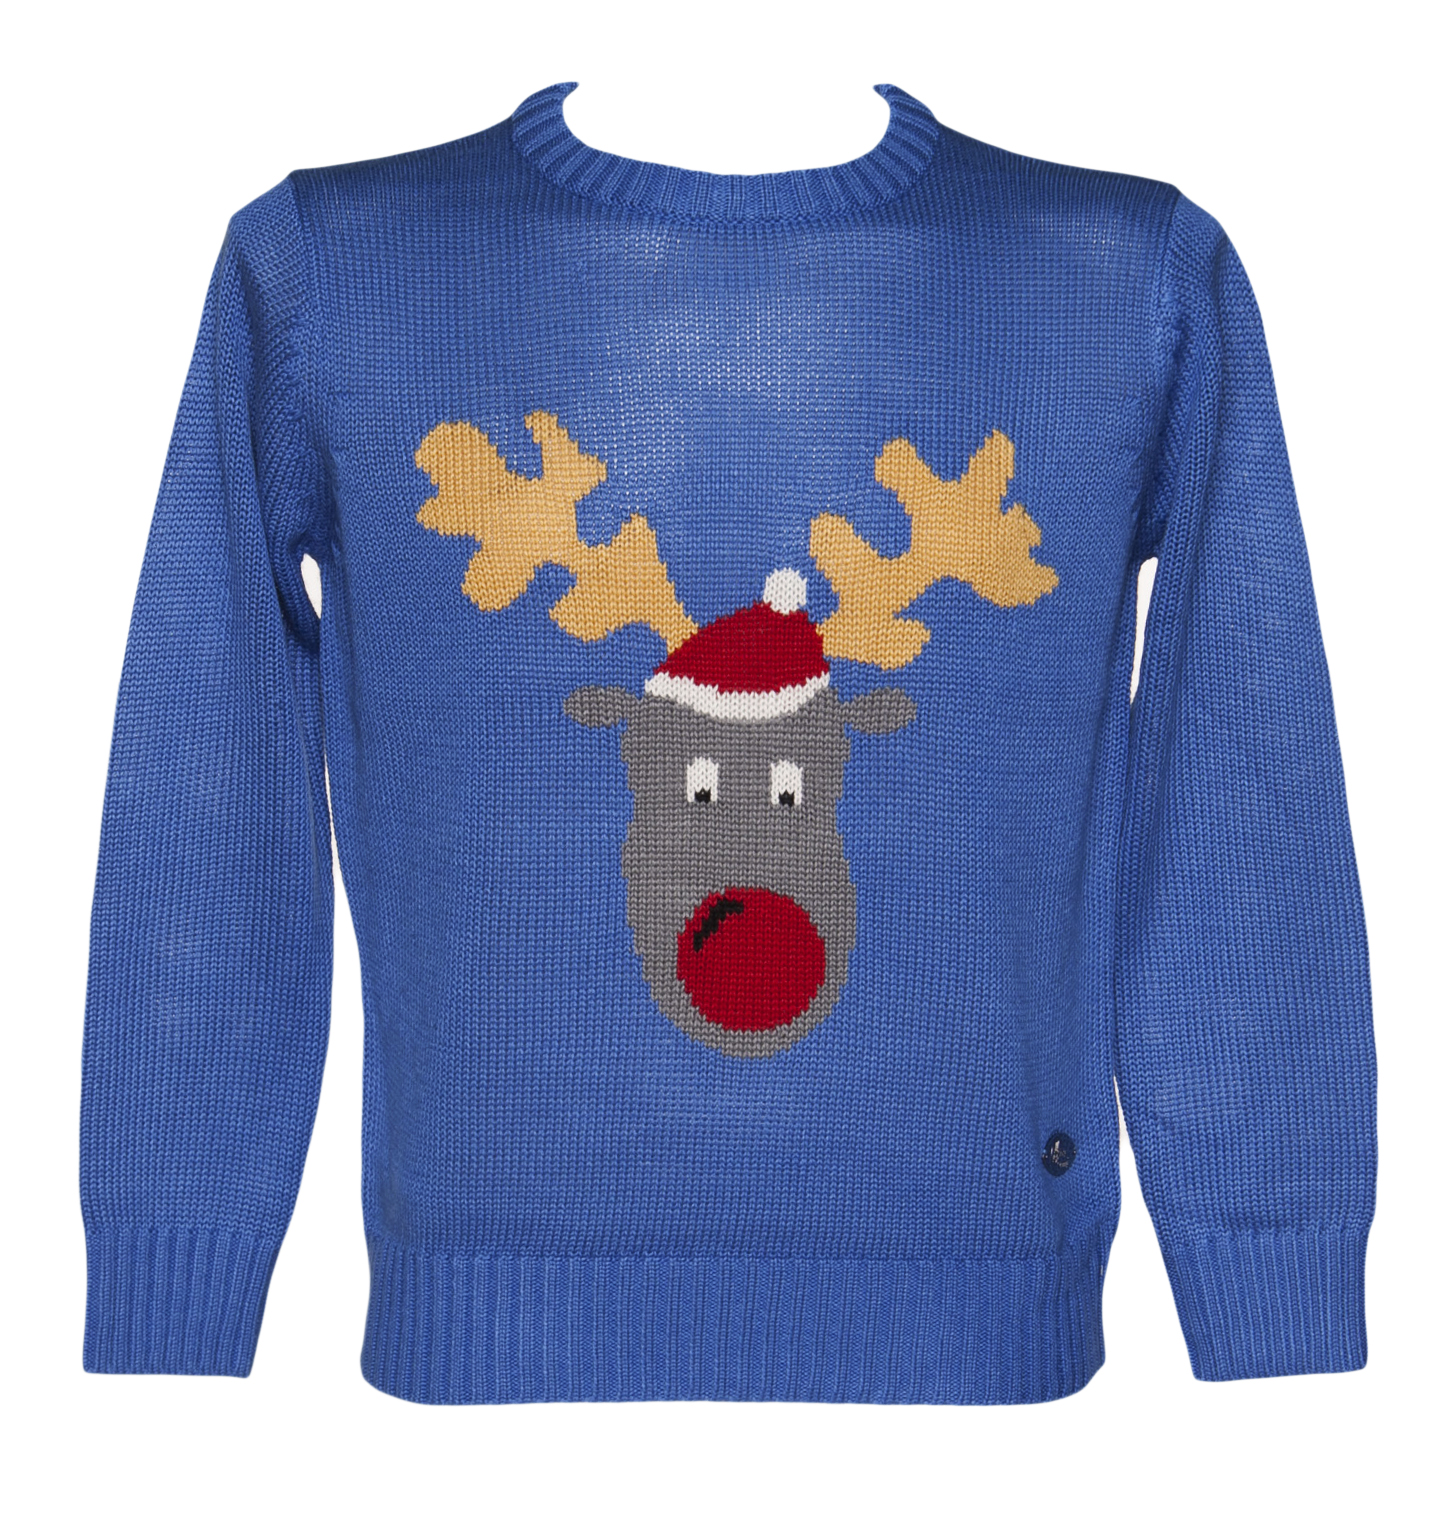 Unisex Reggie Reindeer Christmas Jumper from